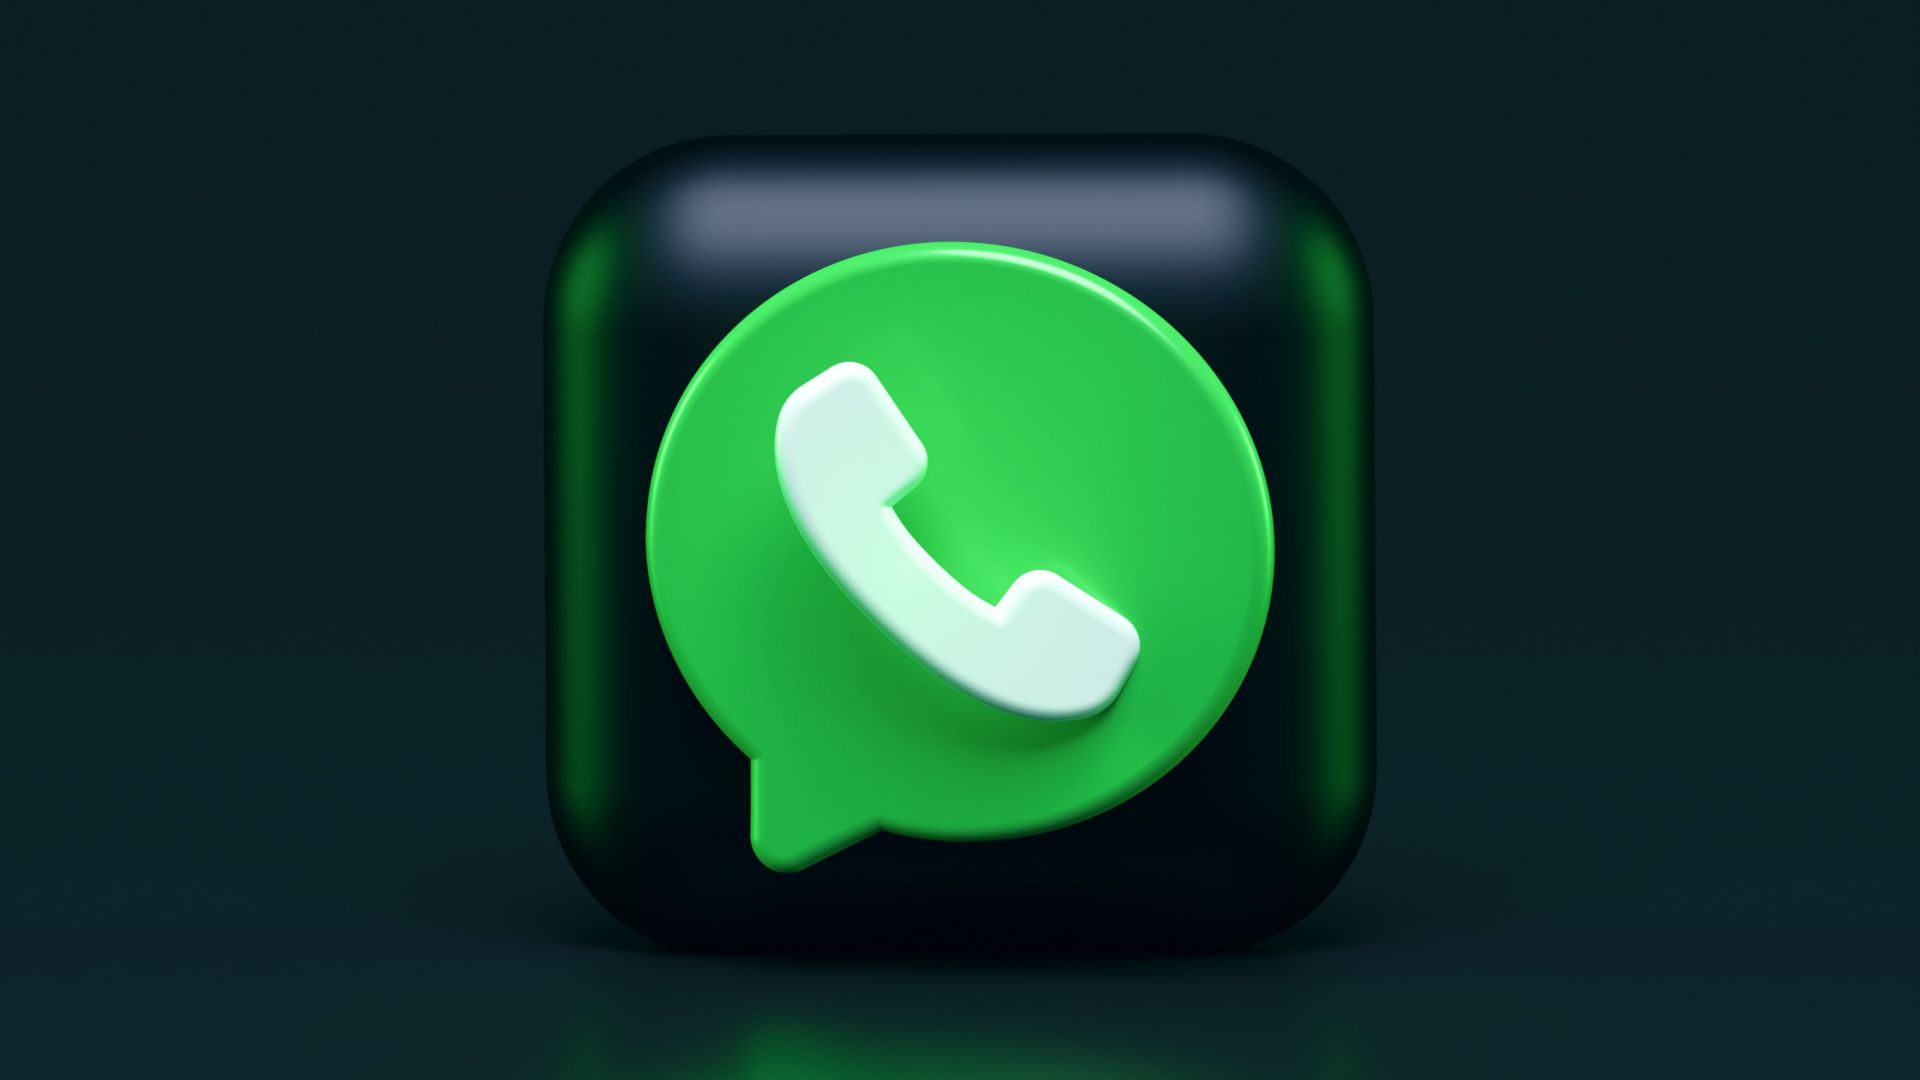 Grupos de WhatsApp Games - Grupos de WhatsApp